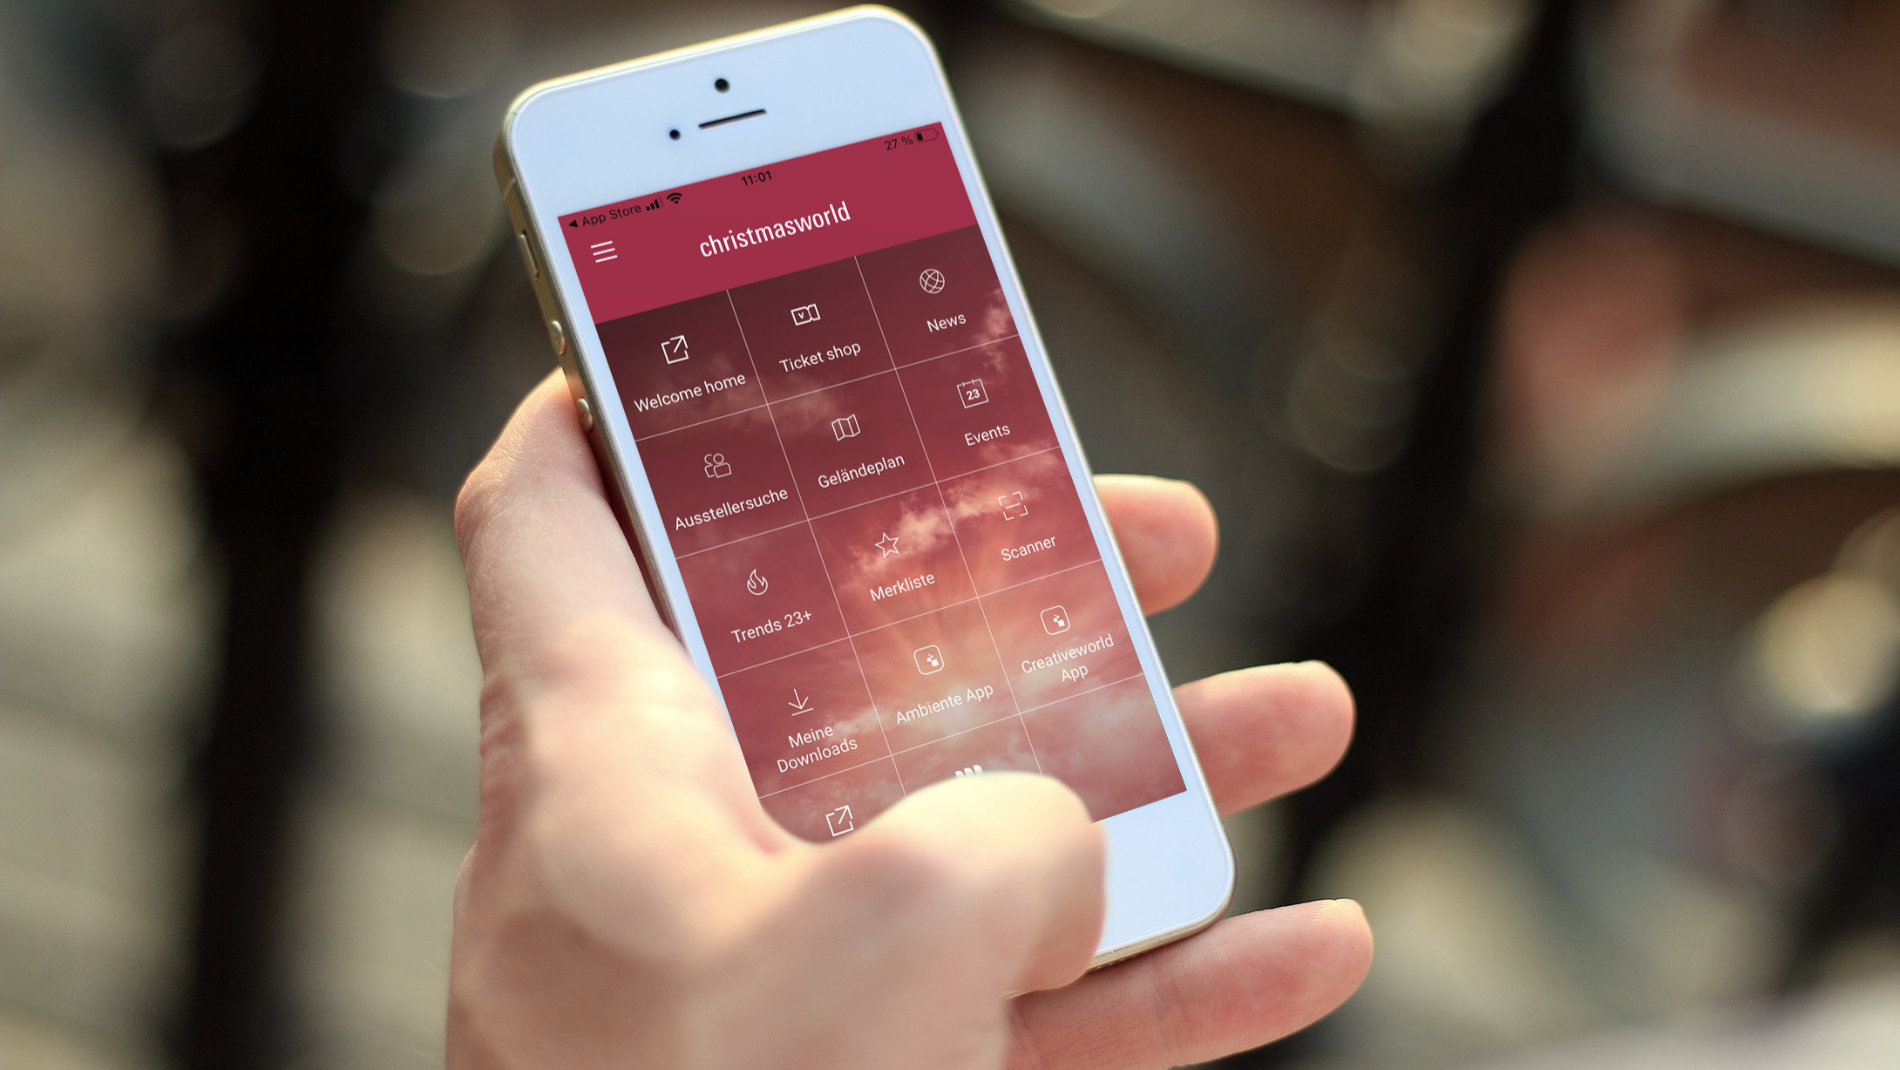 Christmasworld Navigator App on a smartphone